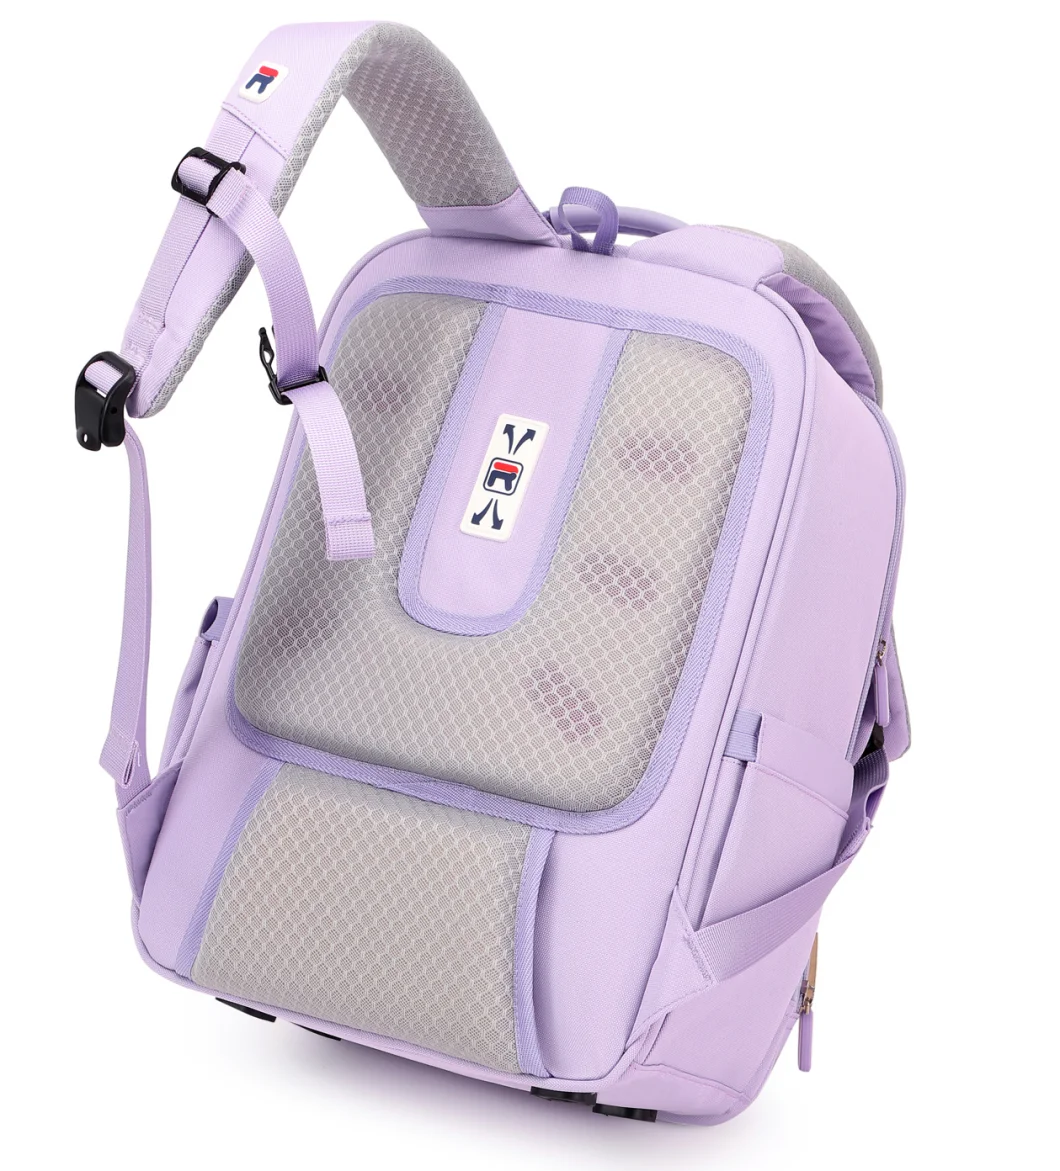 Unisex Double Shoulder Primary Cartoon Girl Boys School Children Student Kids Schoolbag Pack Backpack Bag (CY5929)